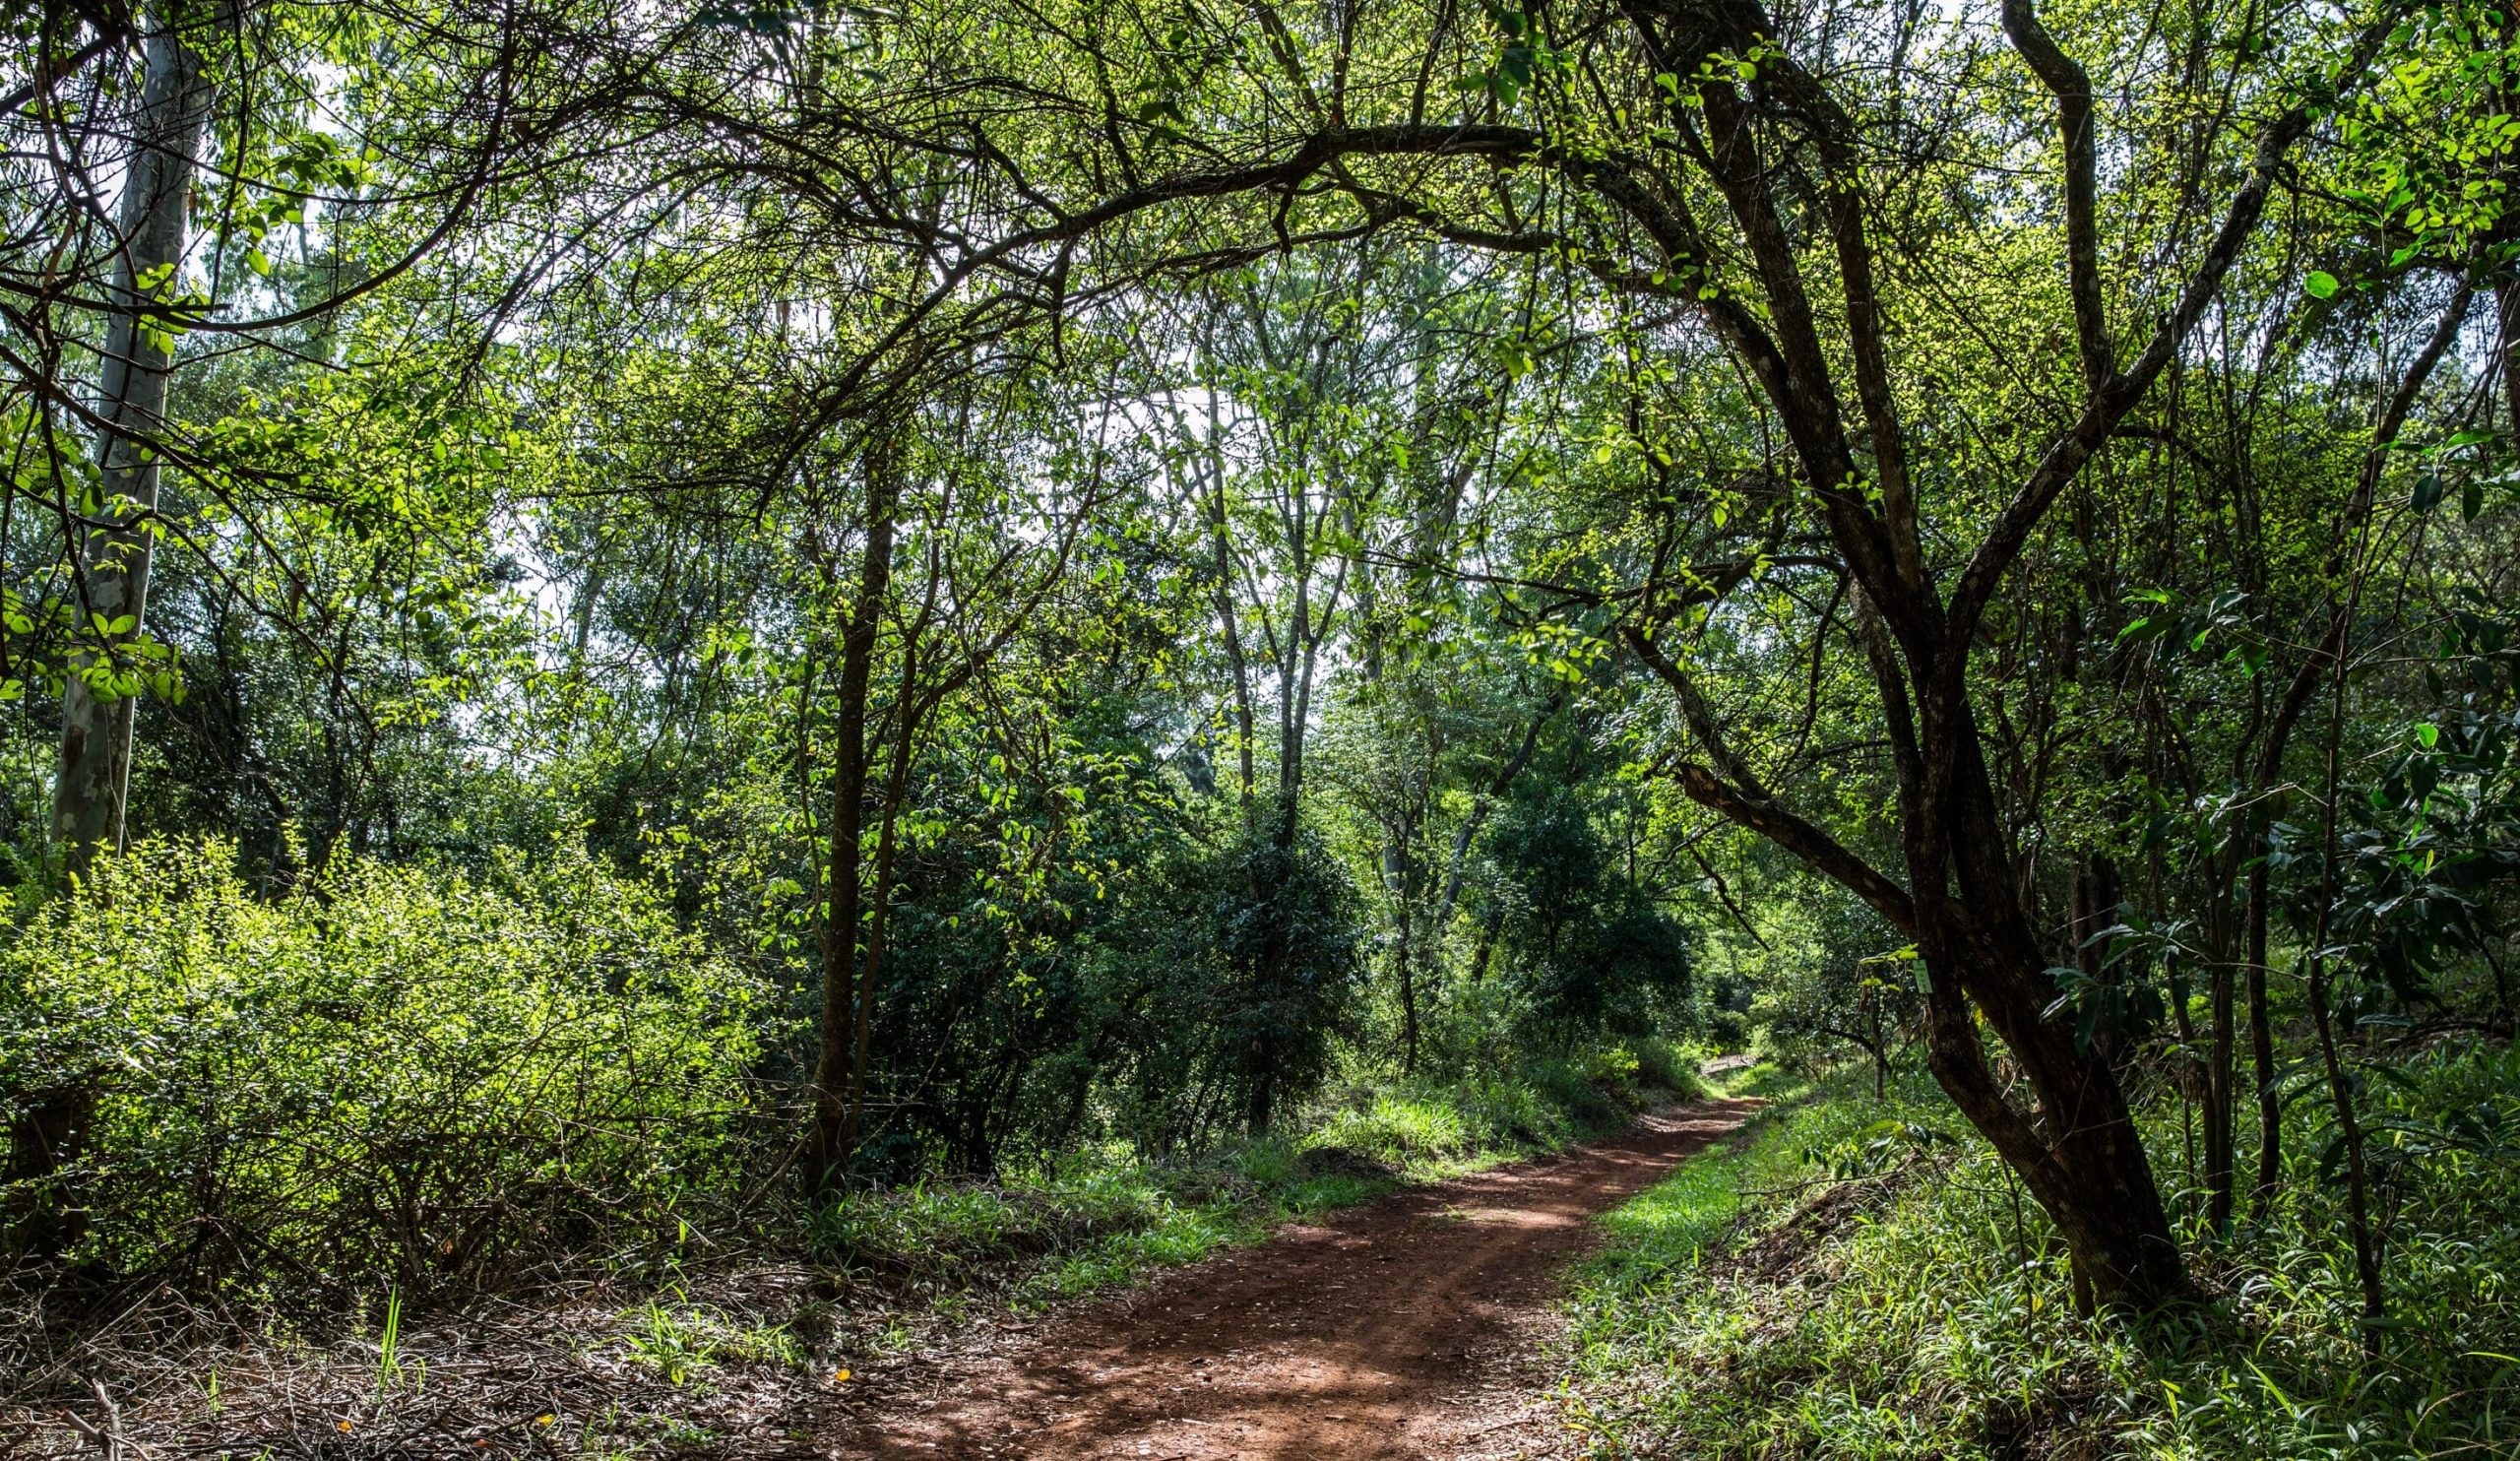 Arabuko sokoke forest - Magical Kenya, in Spain